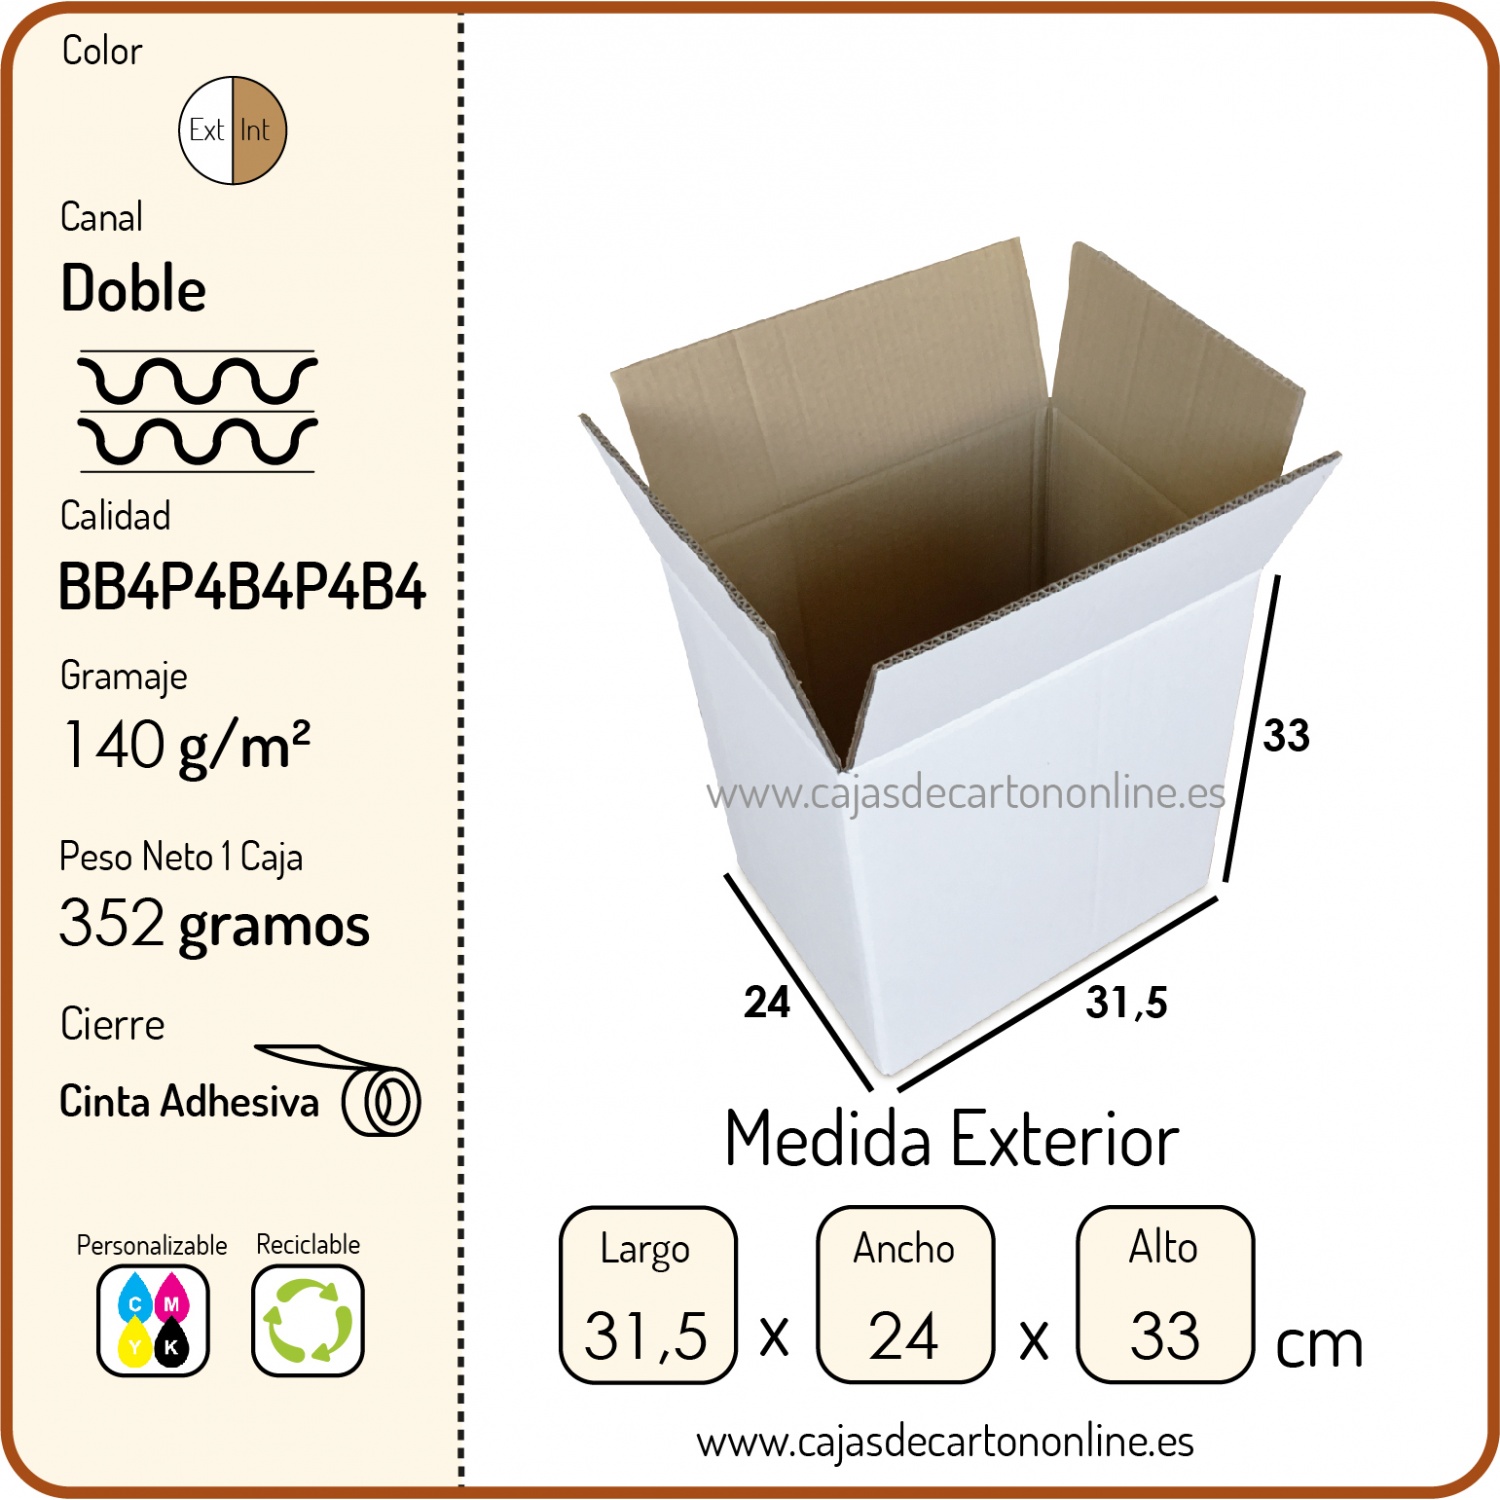 marrón marrón o blanco MB-0 180 x 100 x 30mm 200 Caja de cartón Maxibrief Cajas de Cartón Plegables Caja Plegable de Cartón Maxibrief tamaño a elegir 